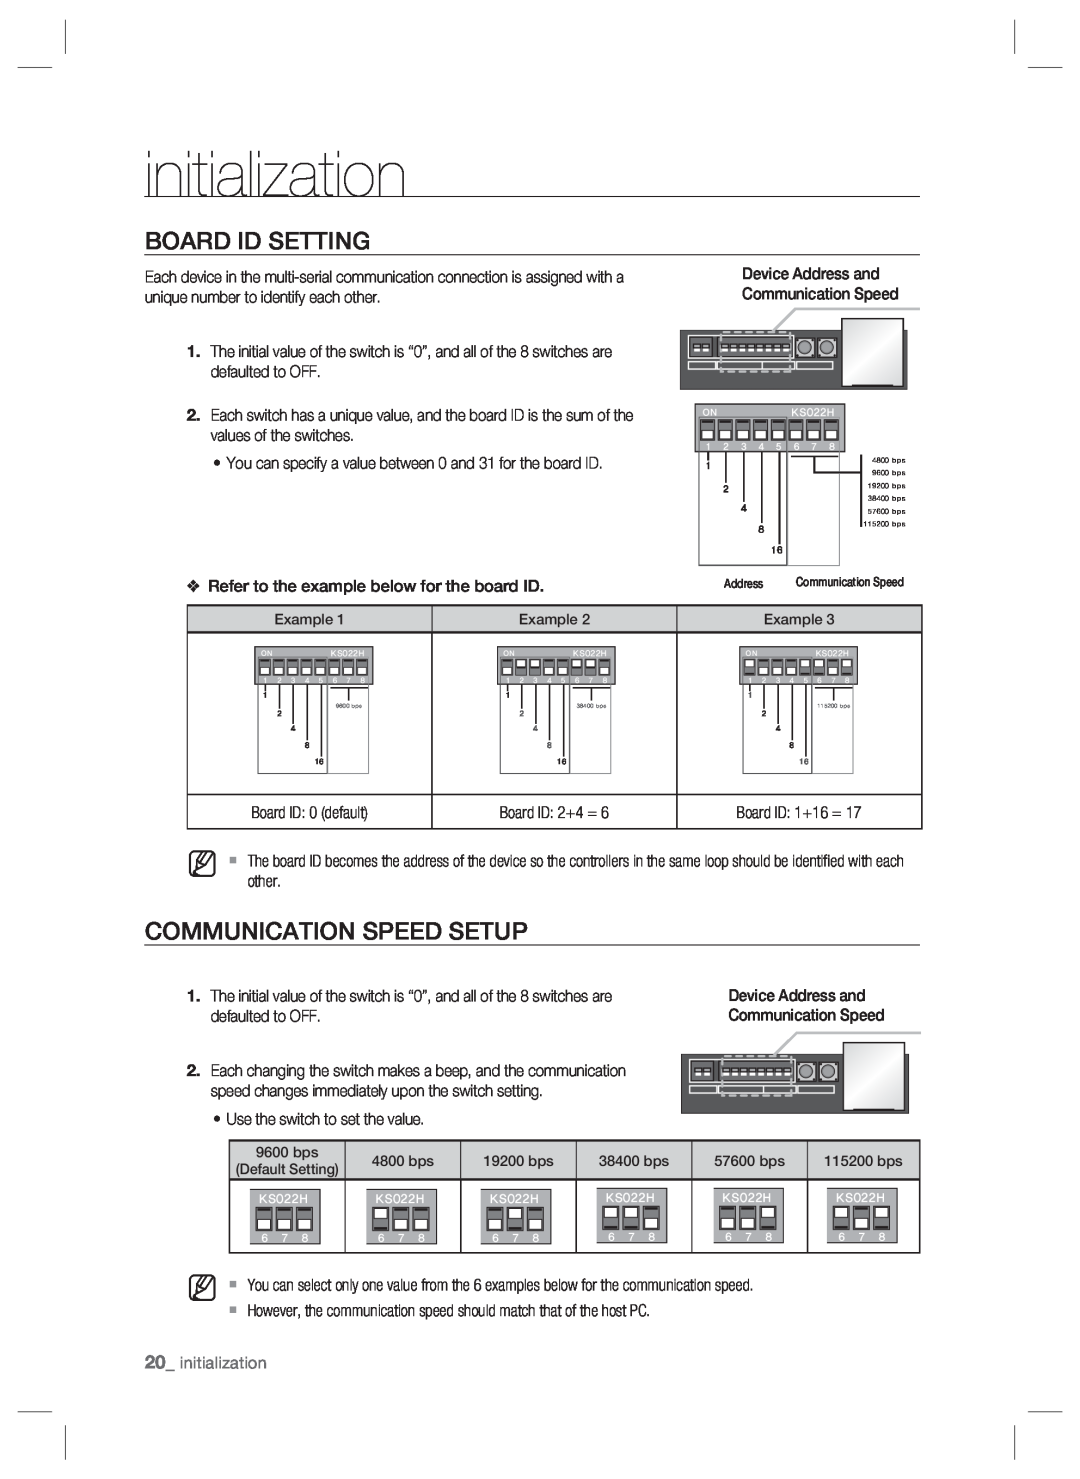 Samsung SSA-P102T user manual initialization, Board Id Setting, Communication Speed Setup 